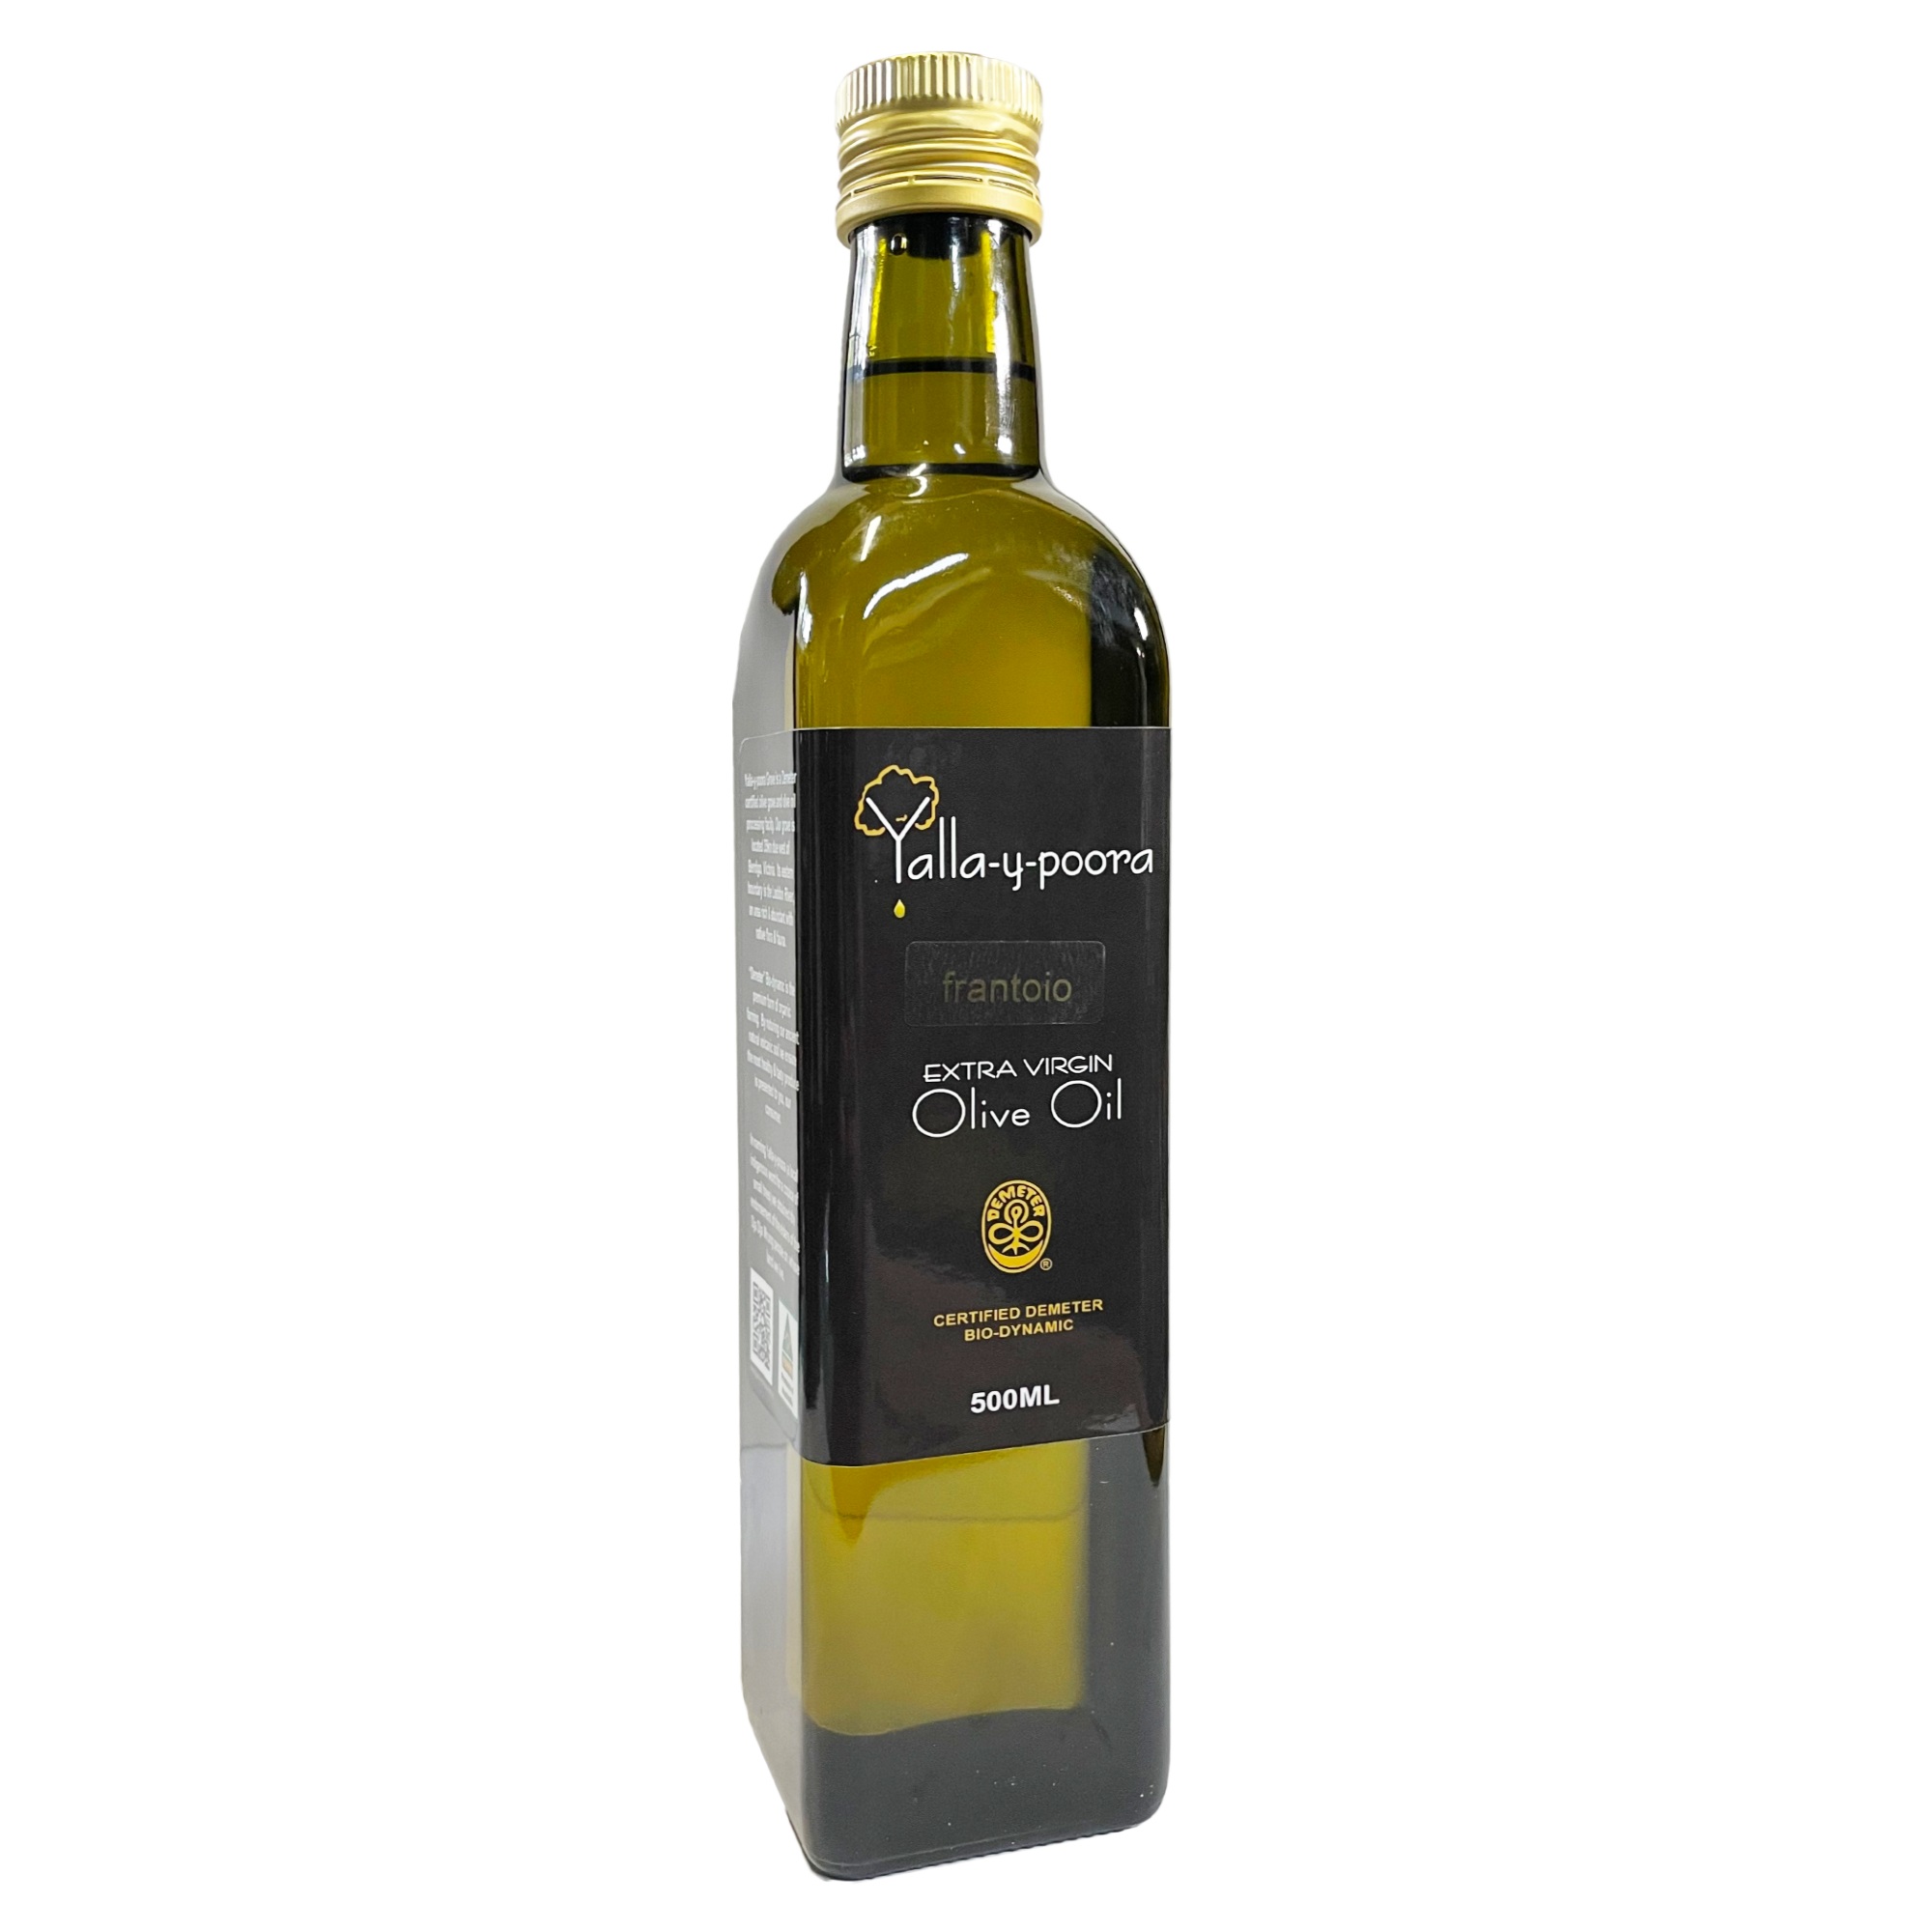 2023 Demeter Bio-Dynamic Extra Virgin Olive Oil - Cultivar "FRANTOIO" - 500ml - Best Before 12/2025